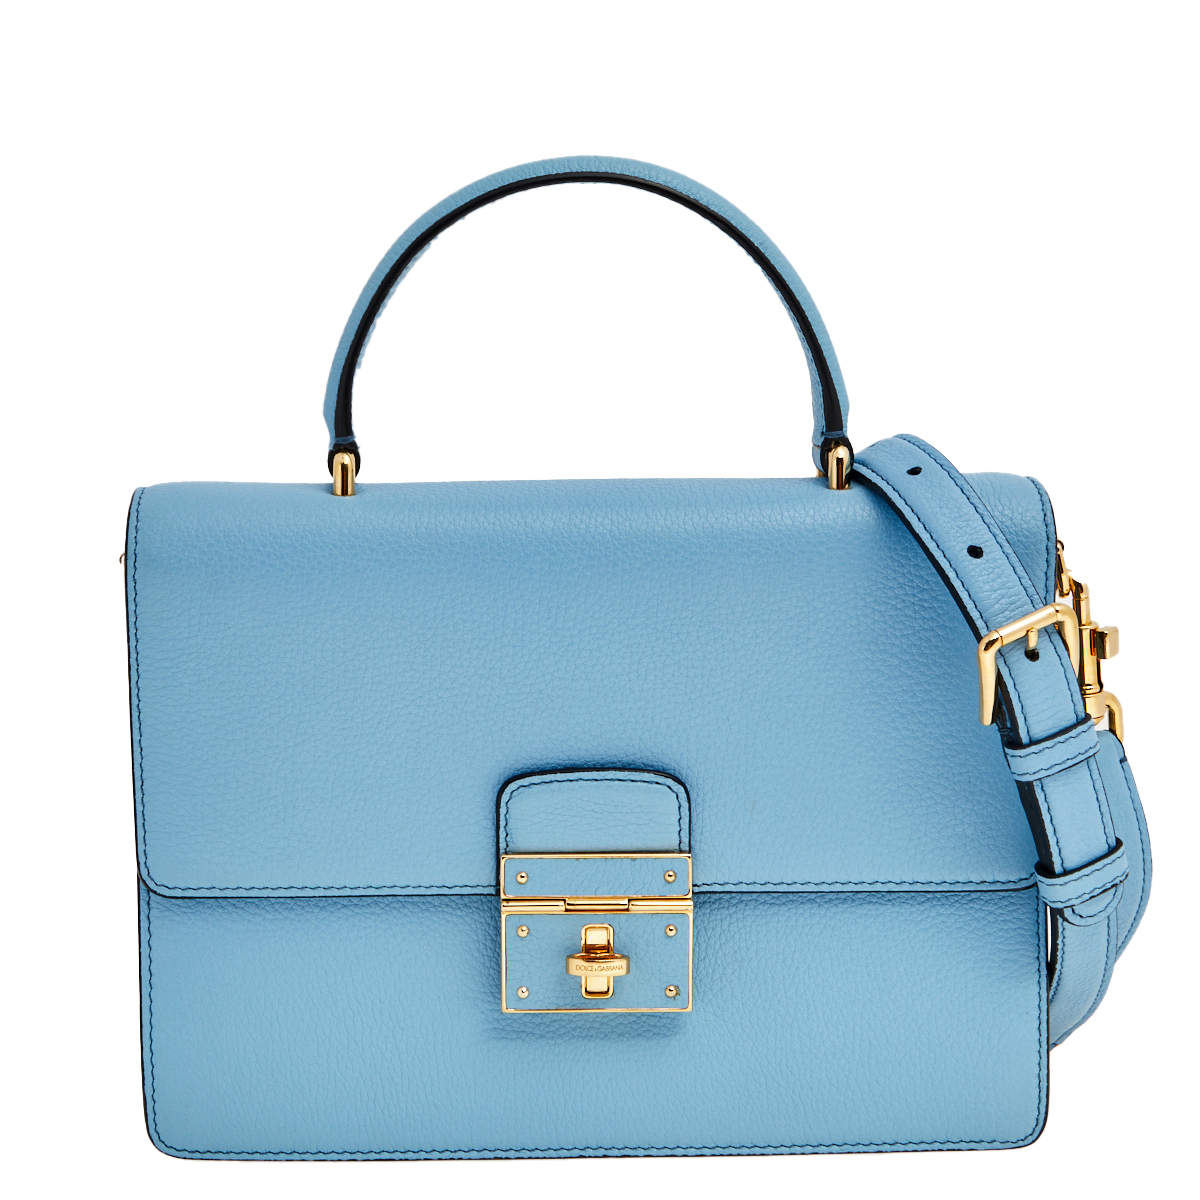 Dolce & Gabbana Light Blue Leather Rosalia Top Handle Bag